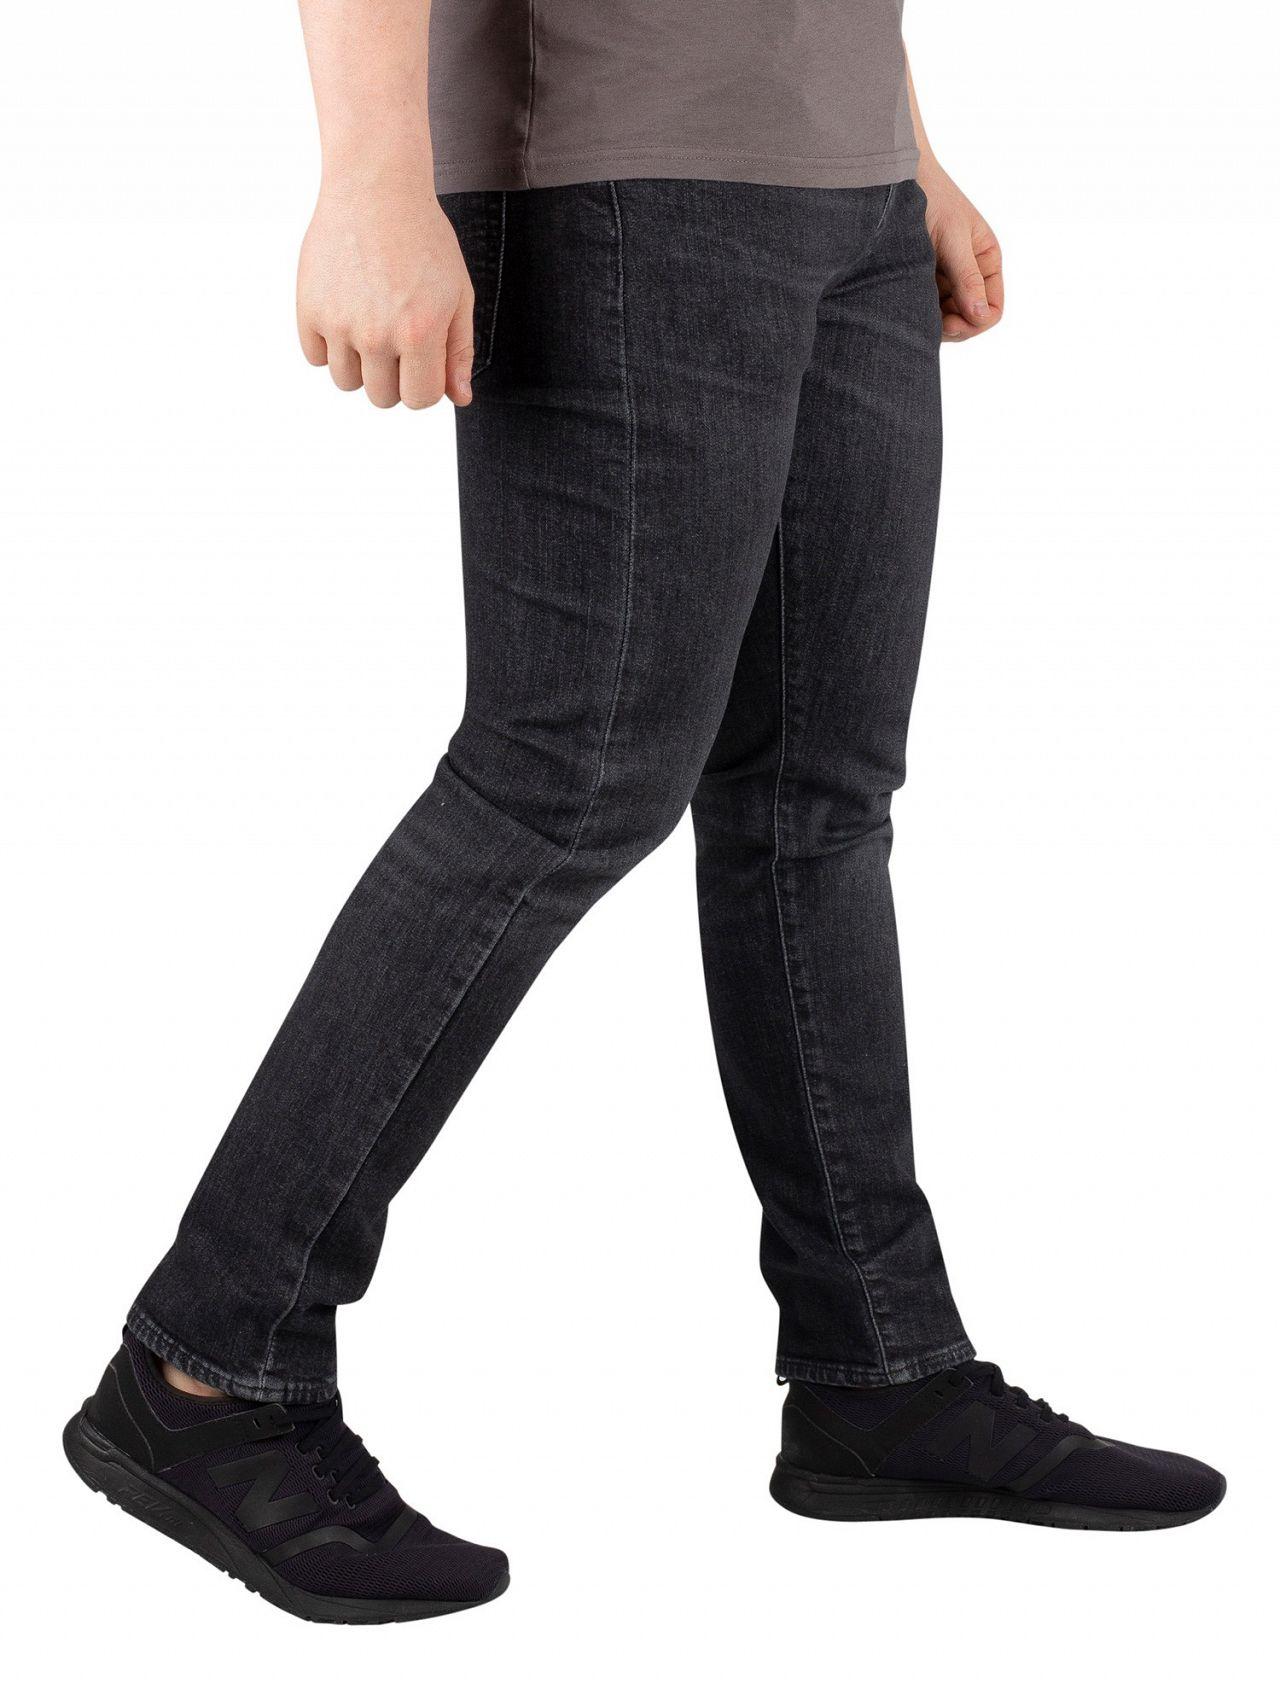 Levi's Denim New Steinway 512 Slim Taper Fit Jeans in Blue for Men - Lyst